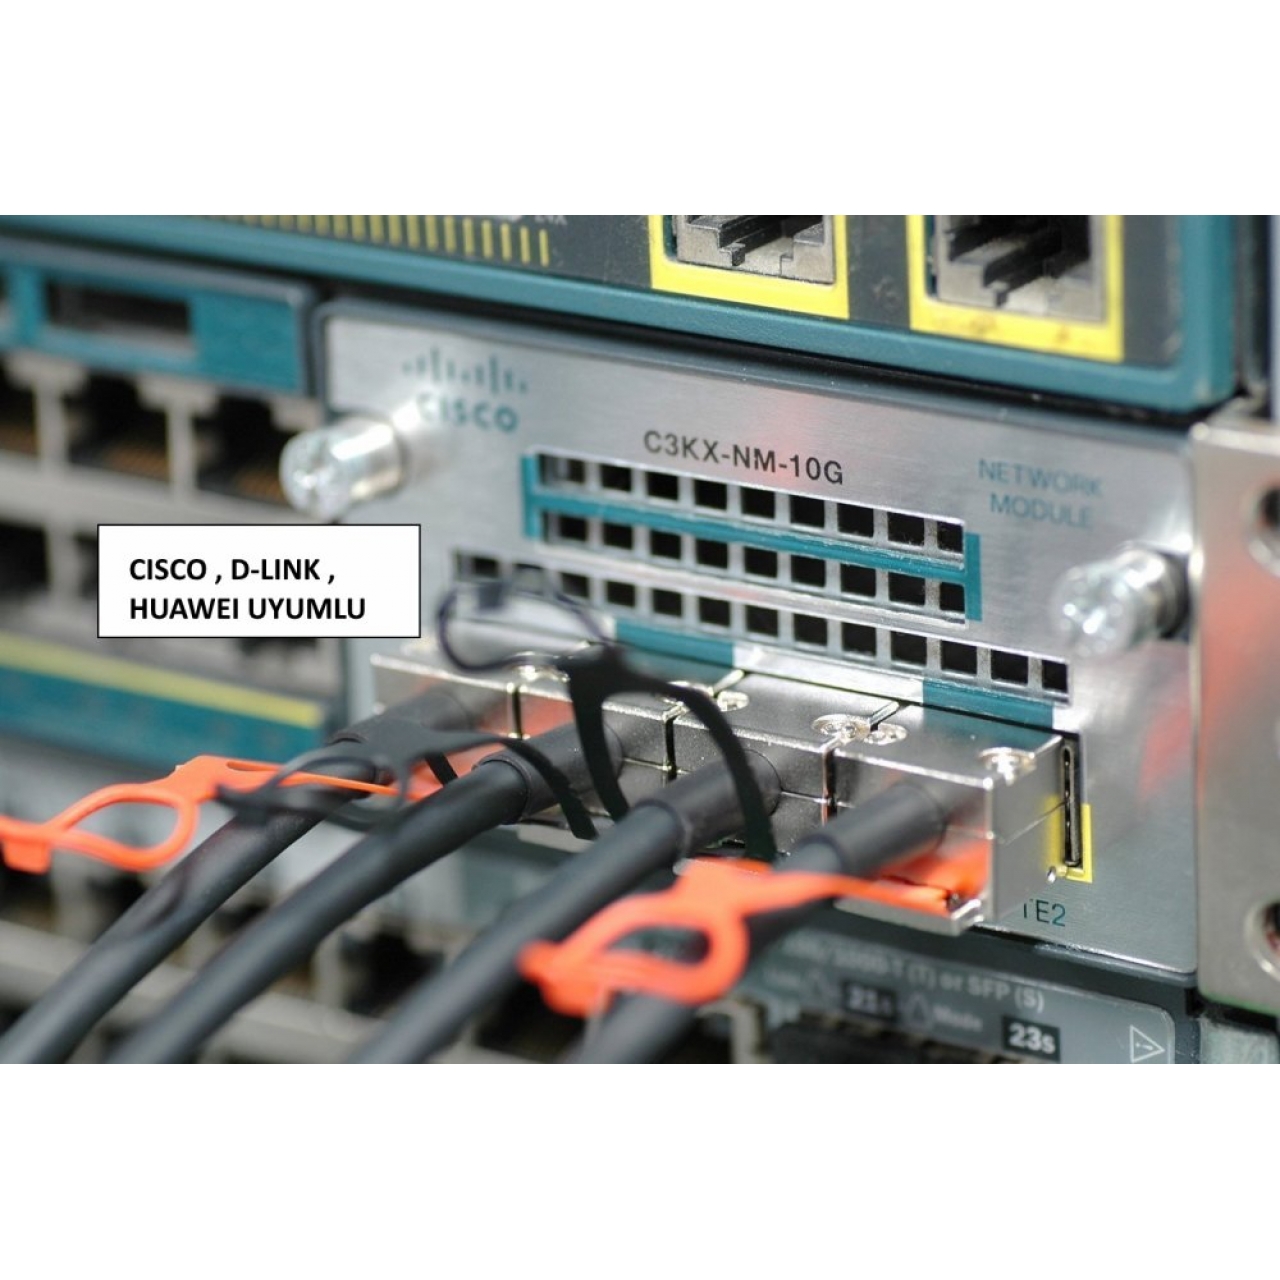 Dac Kablo 1 Metre for Cisco Supermicro Dell D-Link